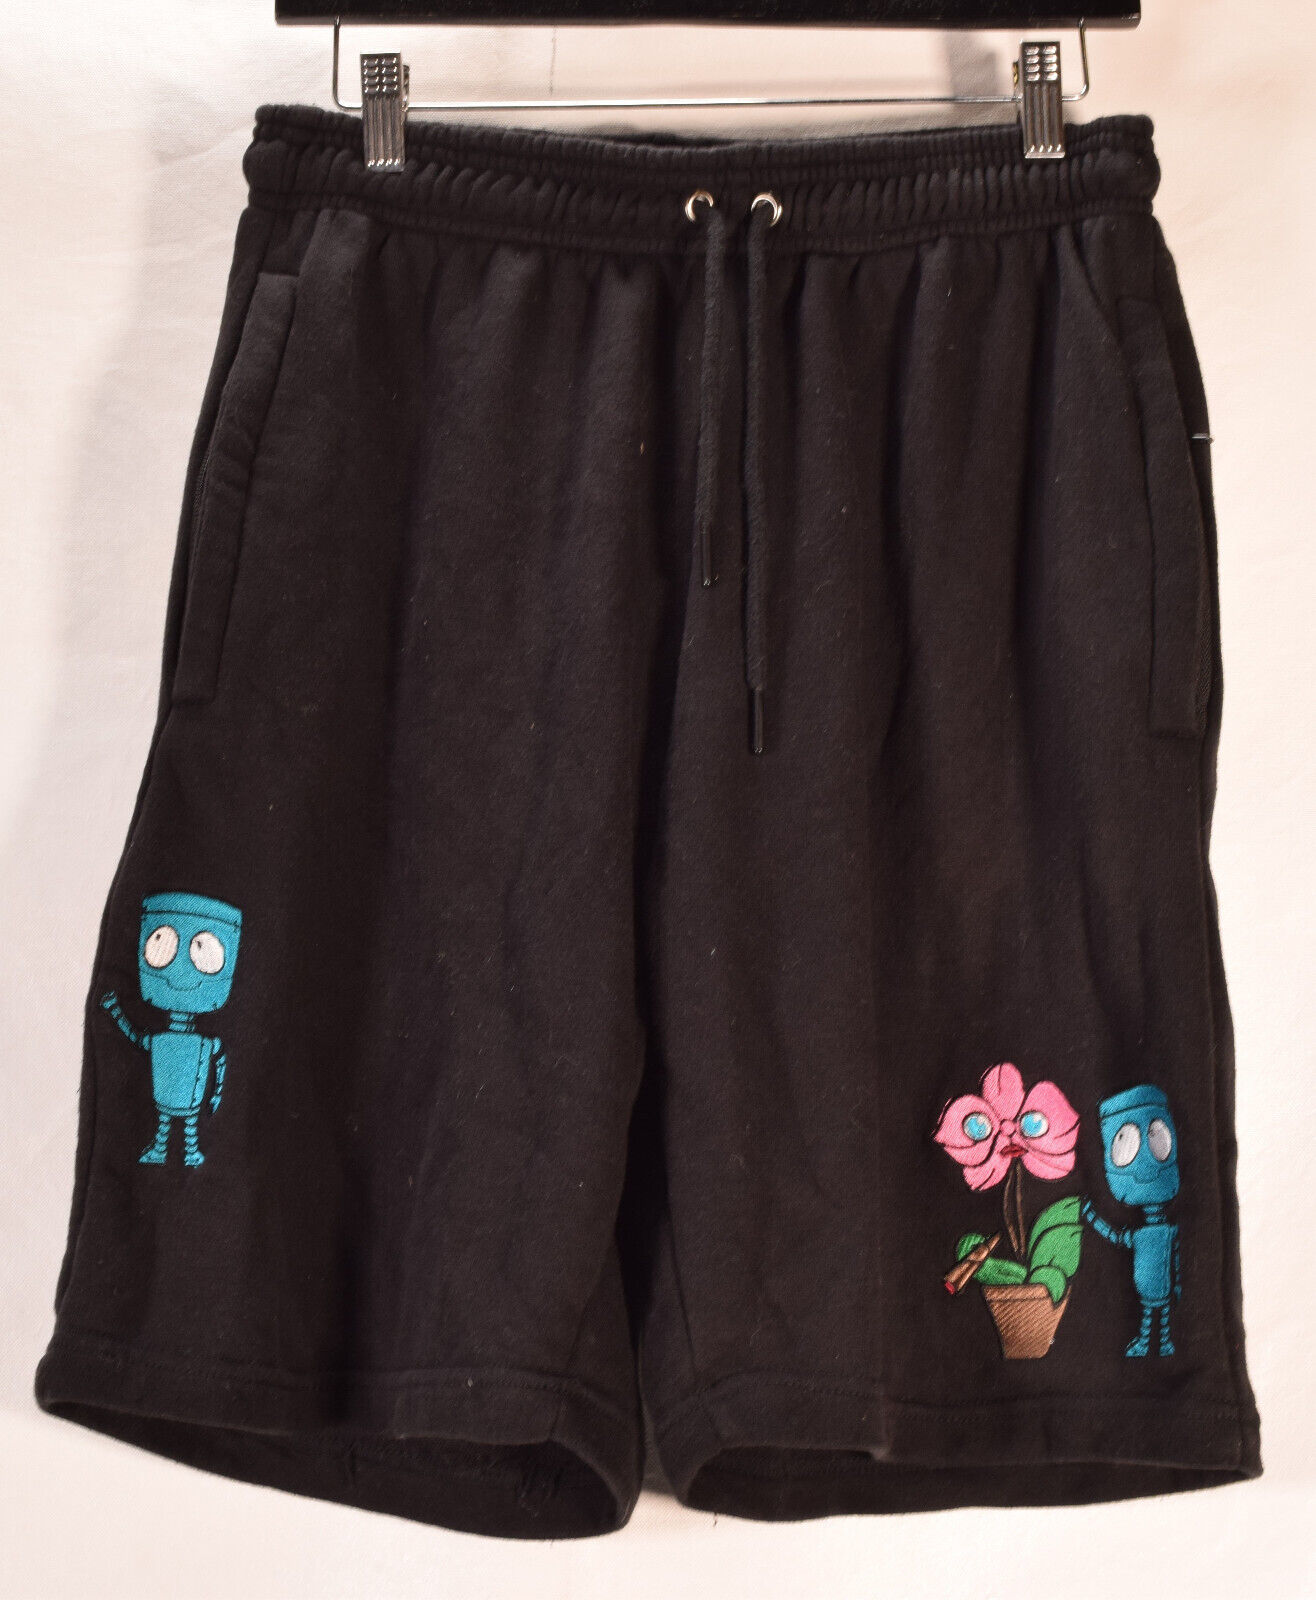 Primary image for Delancy x Mula Mens Comfort Shorts Black XL